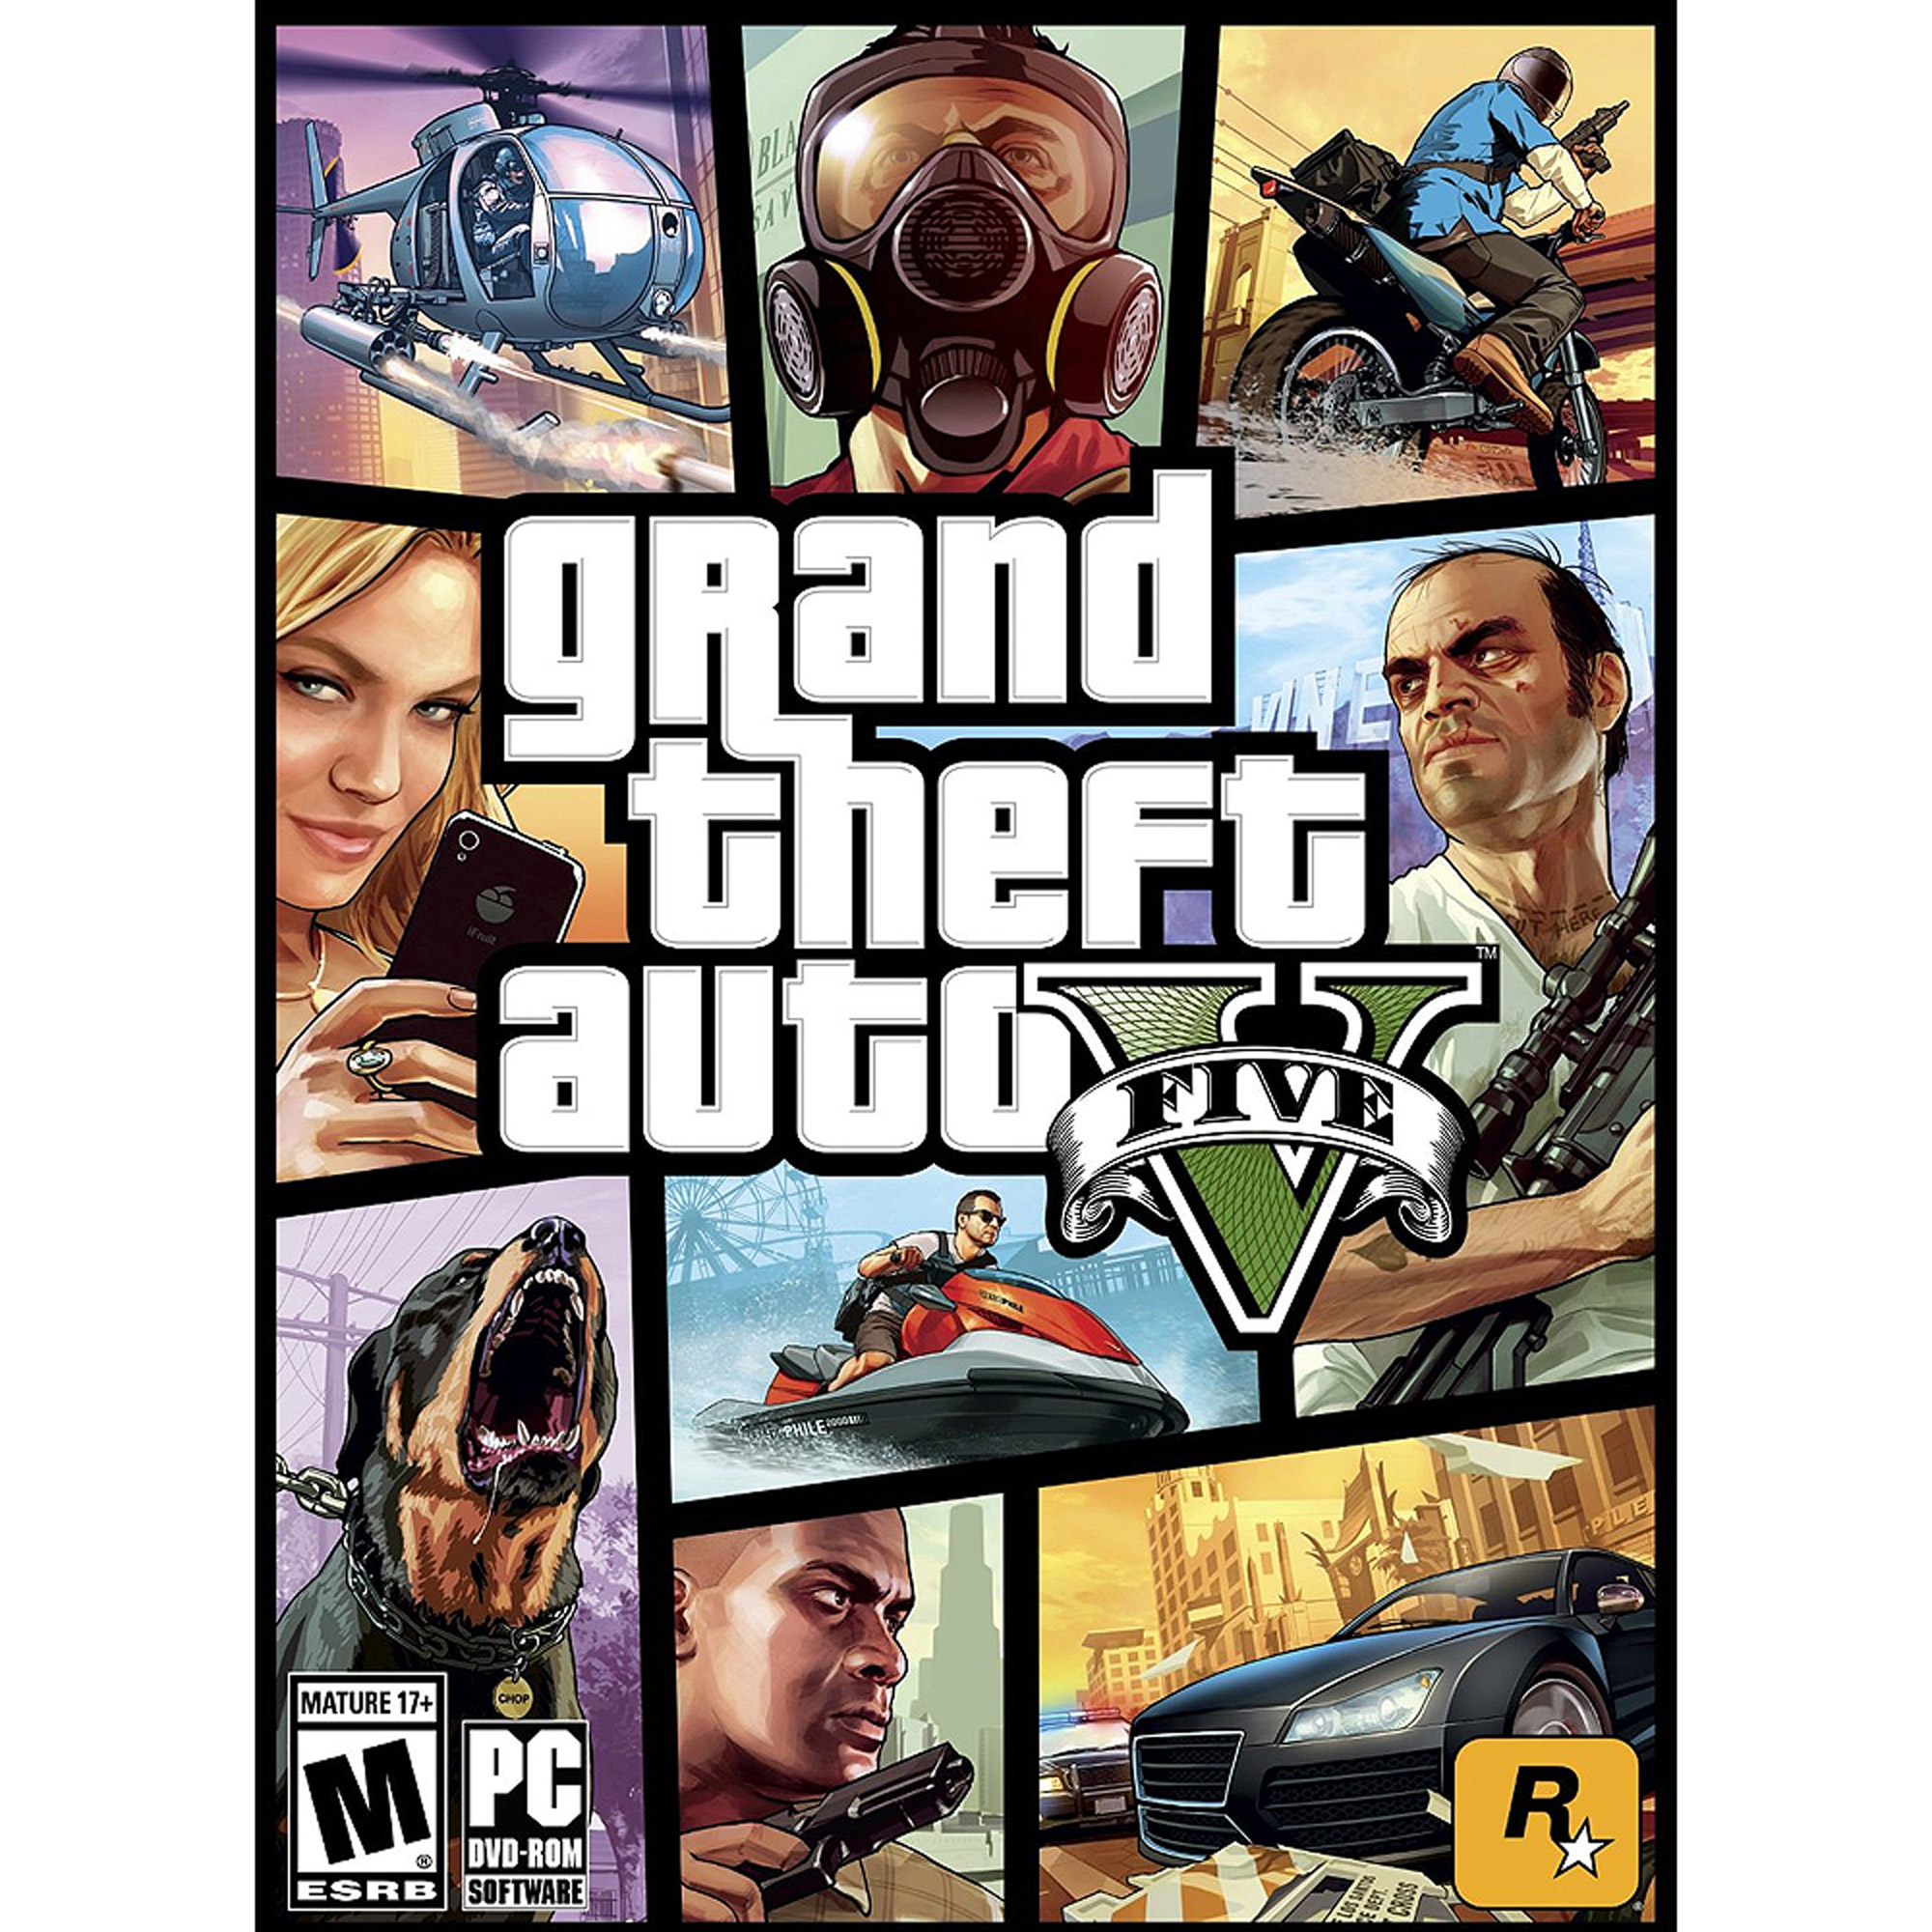 Grand Theft Auto V, Rockstar Games, PC - image 1 of 22